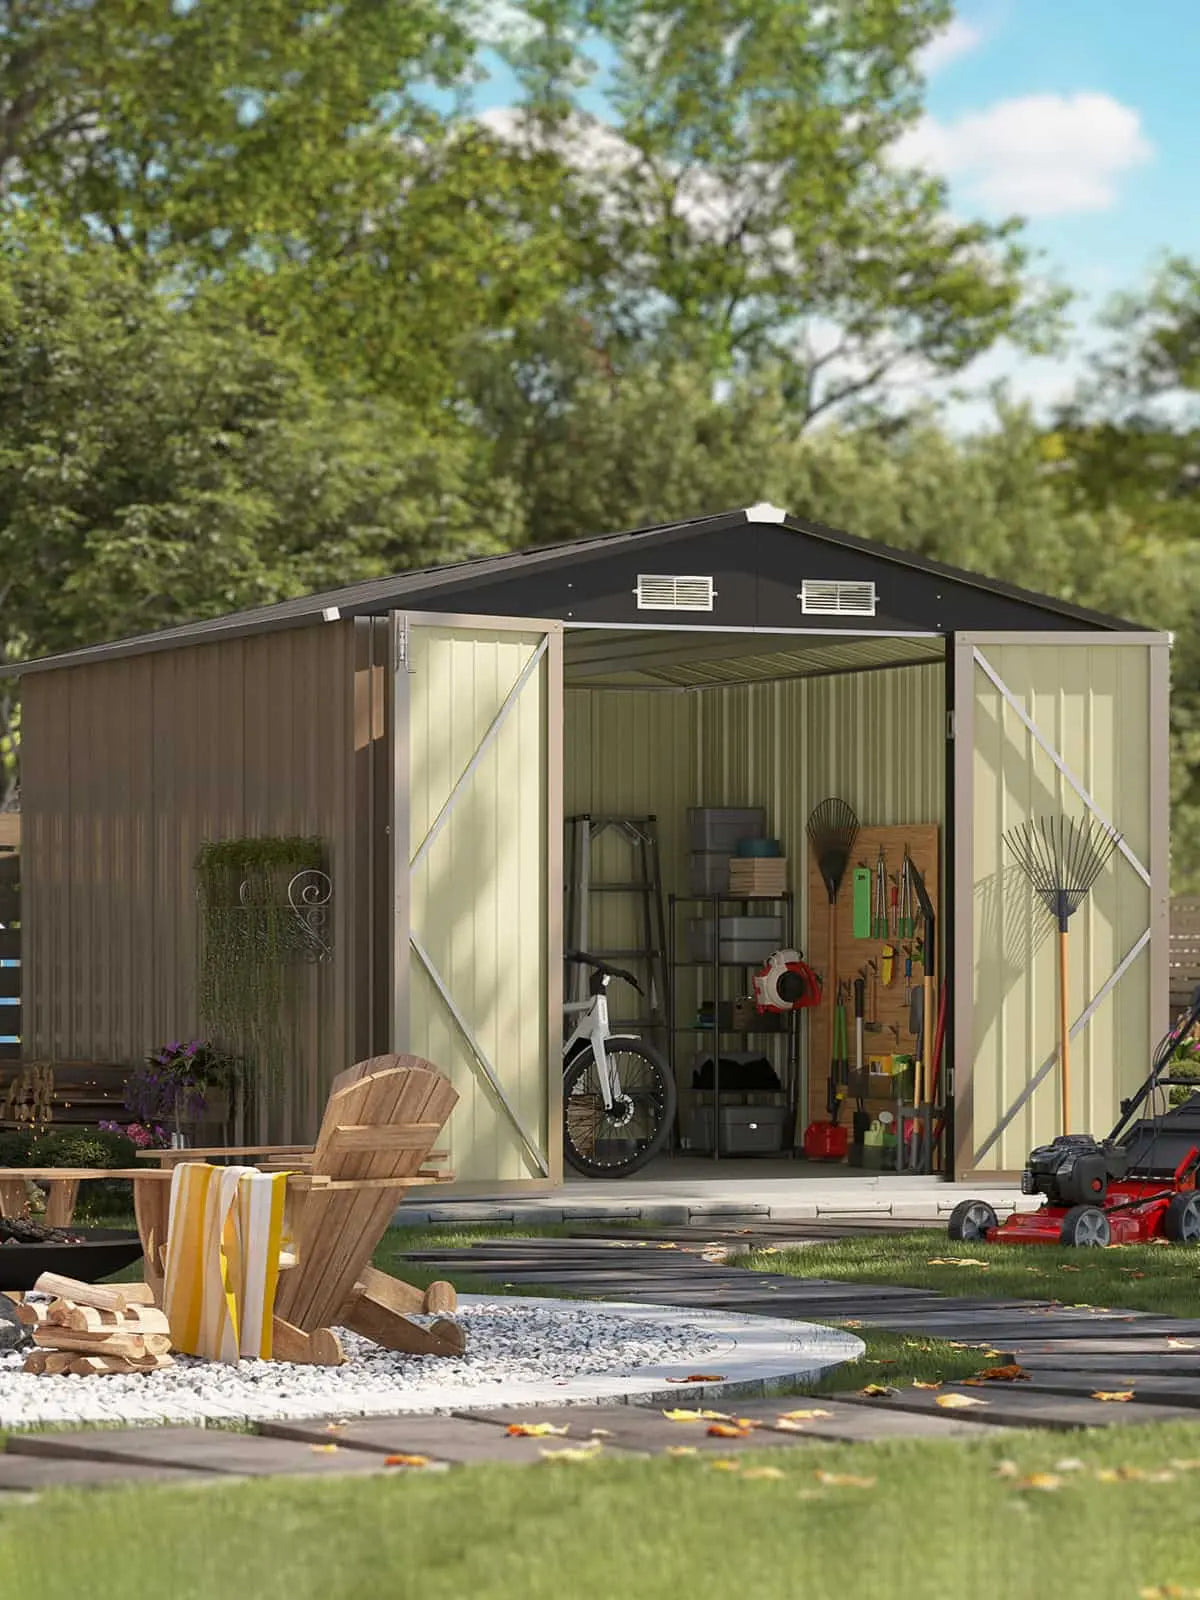 10x10 metal storage shed in a cozy backyard setting.